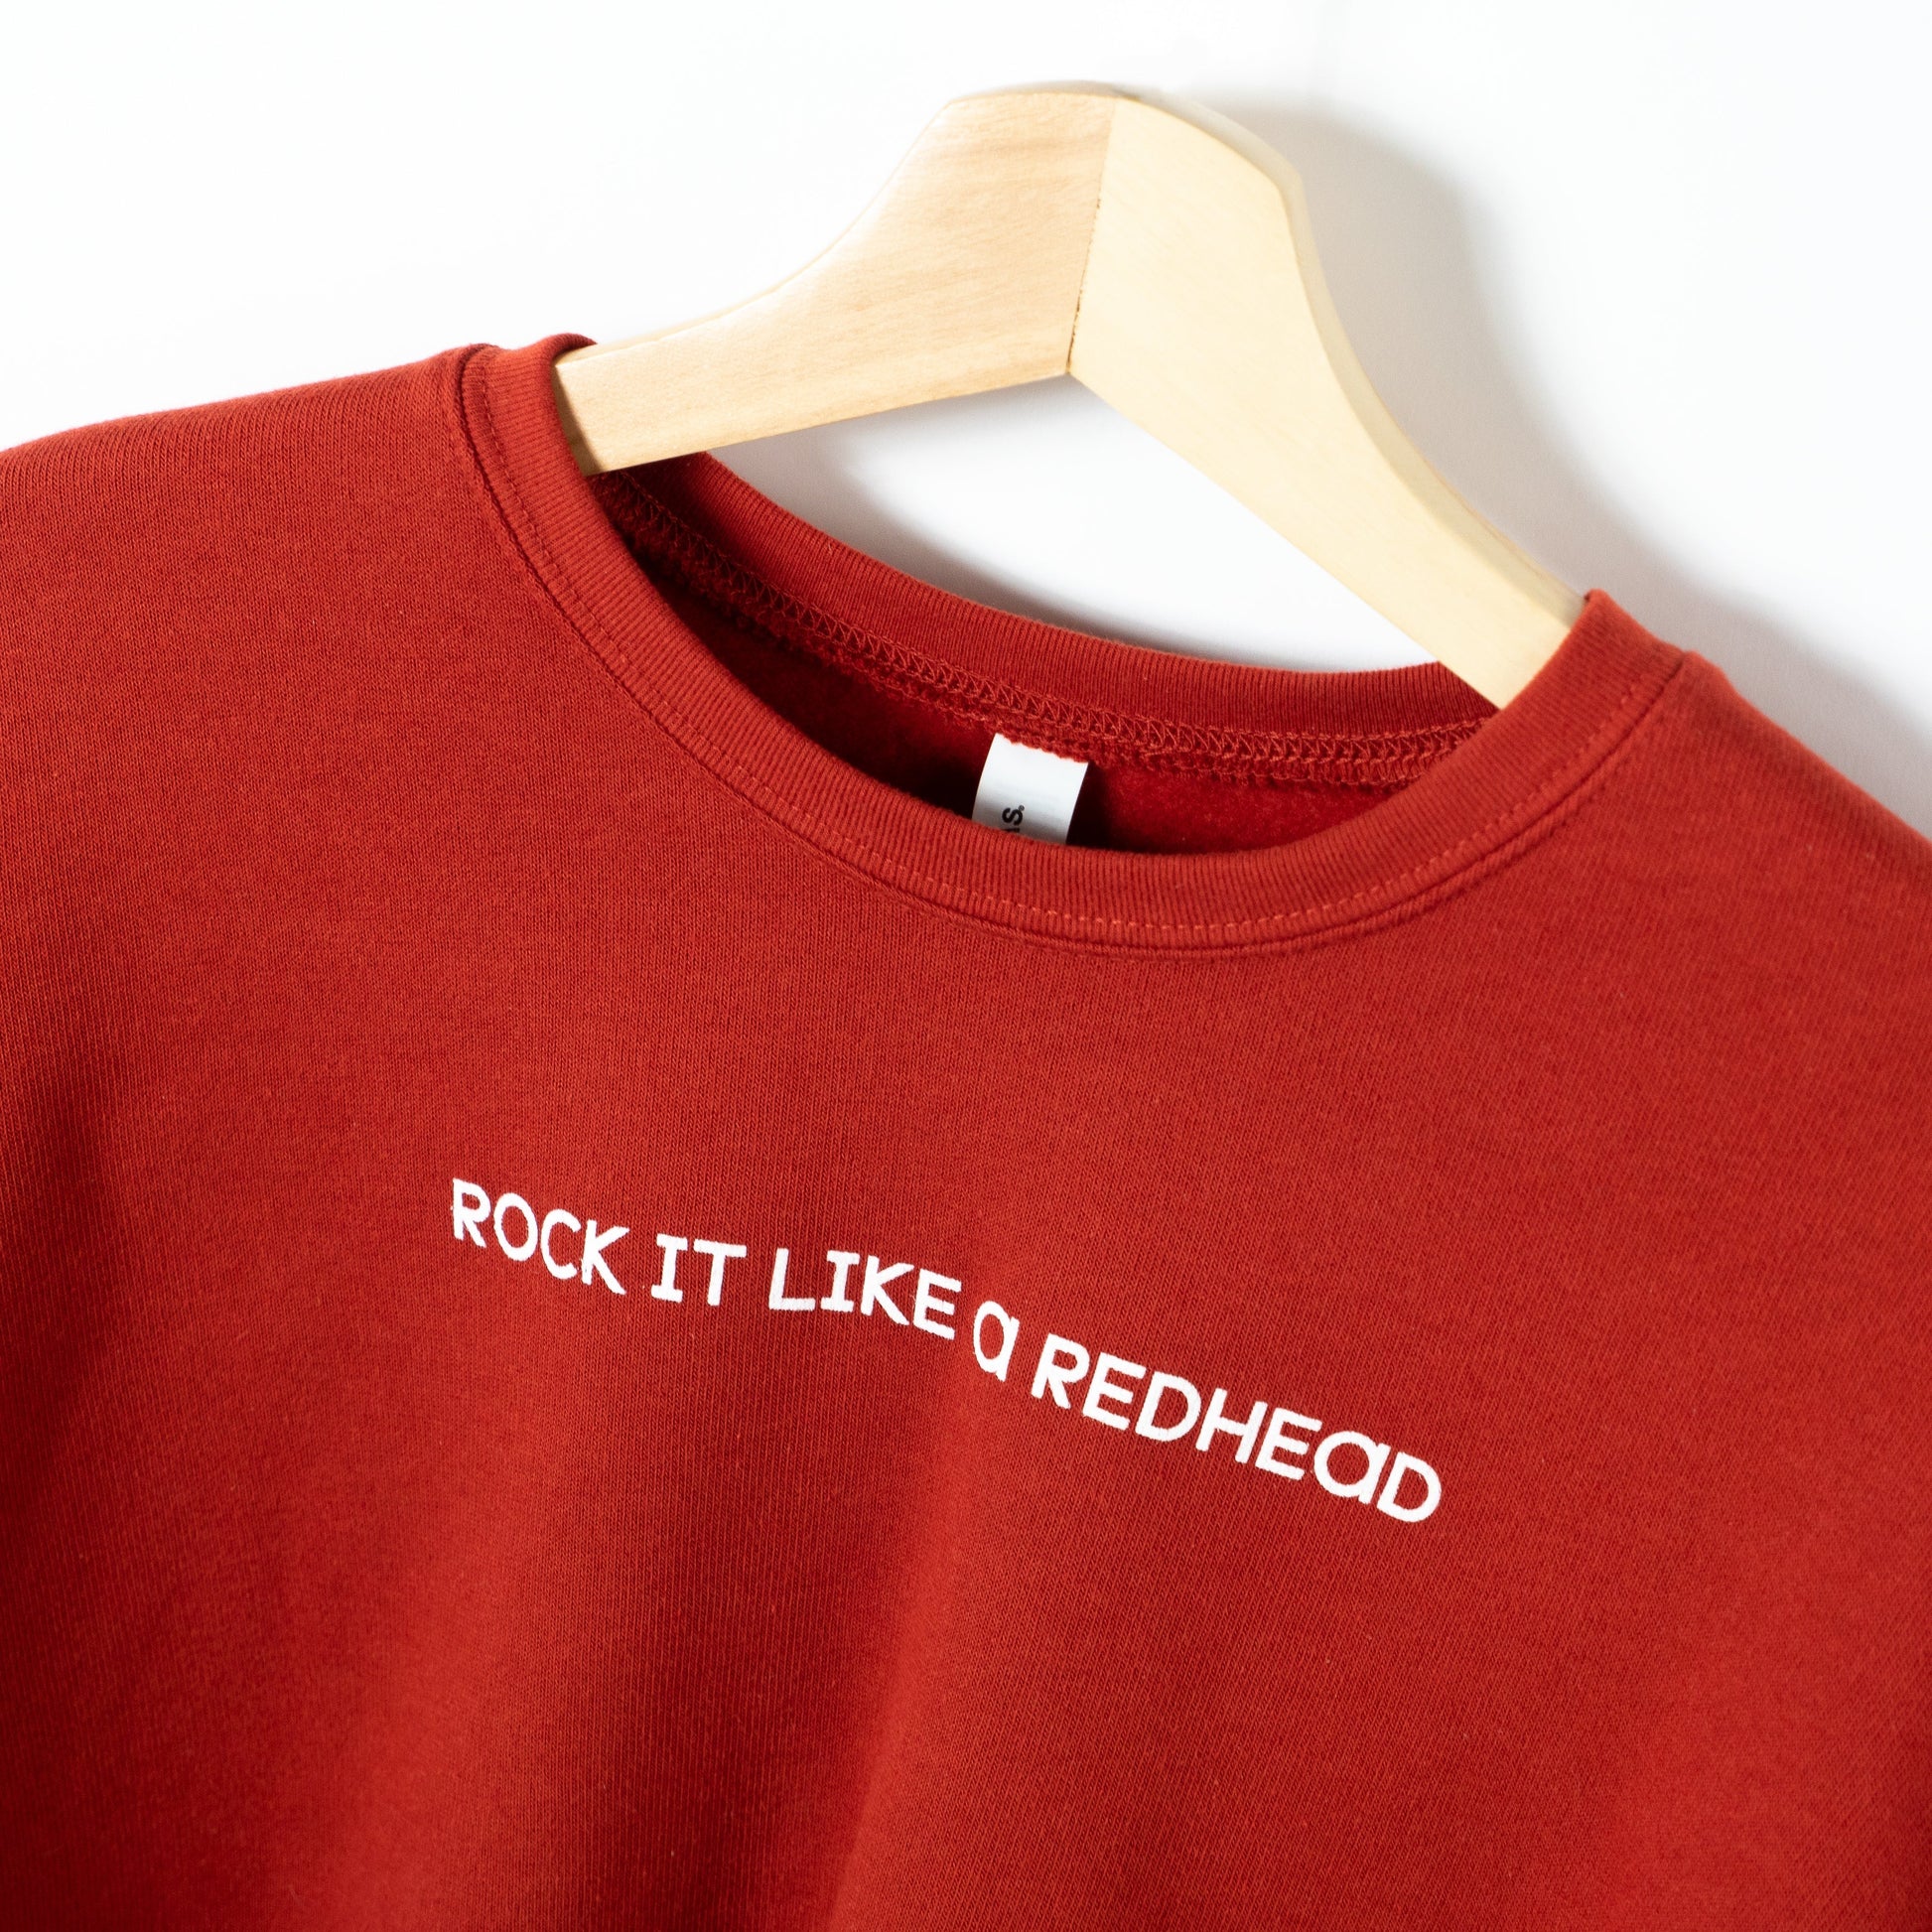 Rock it like a Redhead Cropped Sweatshirt - Brick Burnt Orange